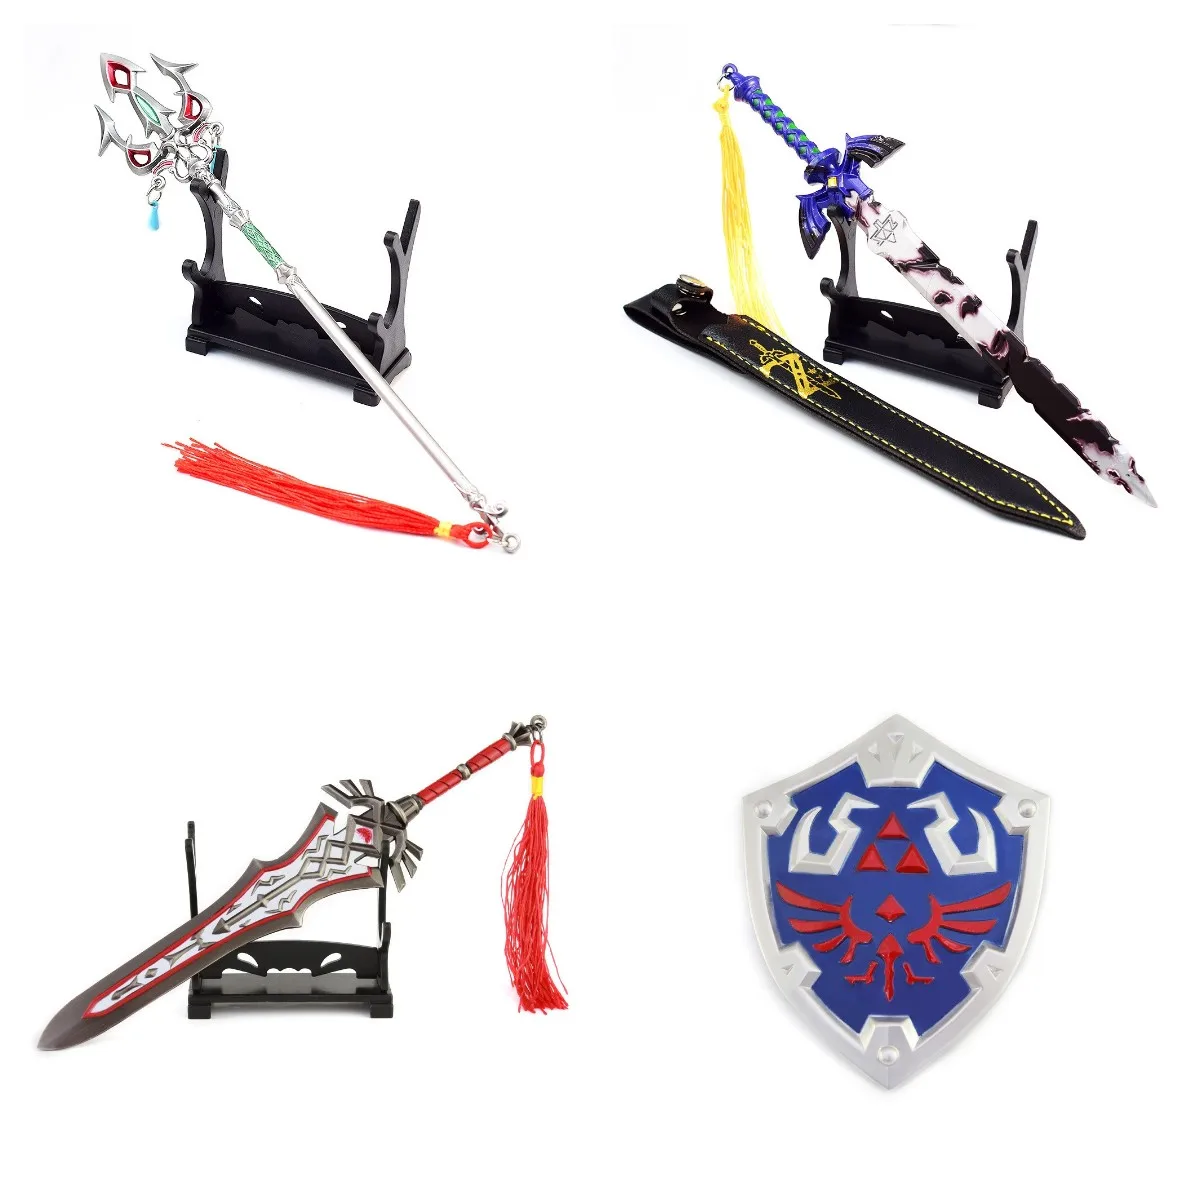 

The Hyrule Fantasy Weapon Master Sword Model Toys Anime Game Periphery Keychain Weapon Model Katana Samurai Gifts Toys for Boys